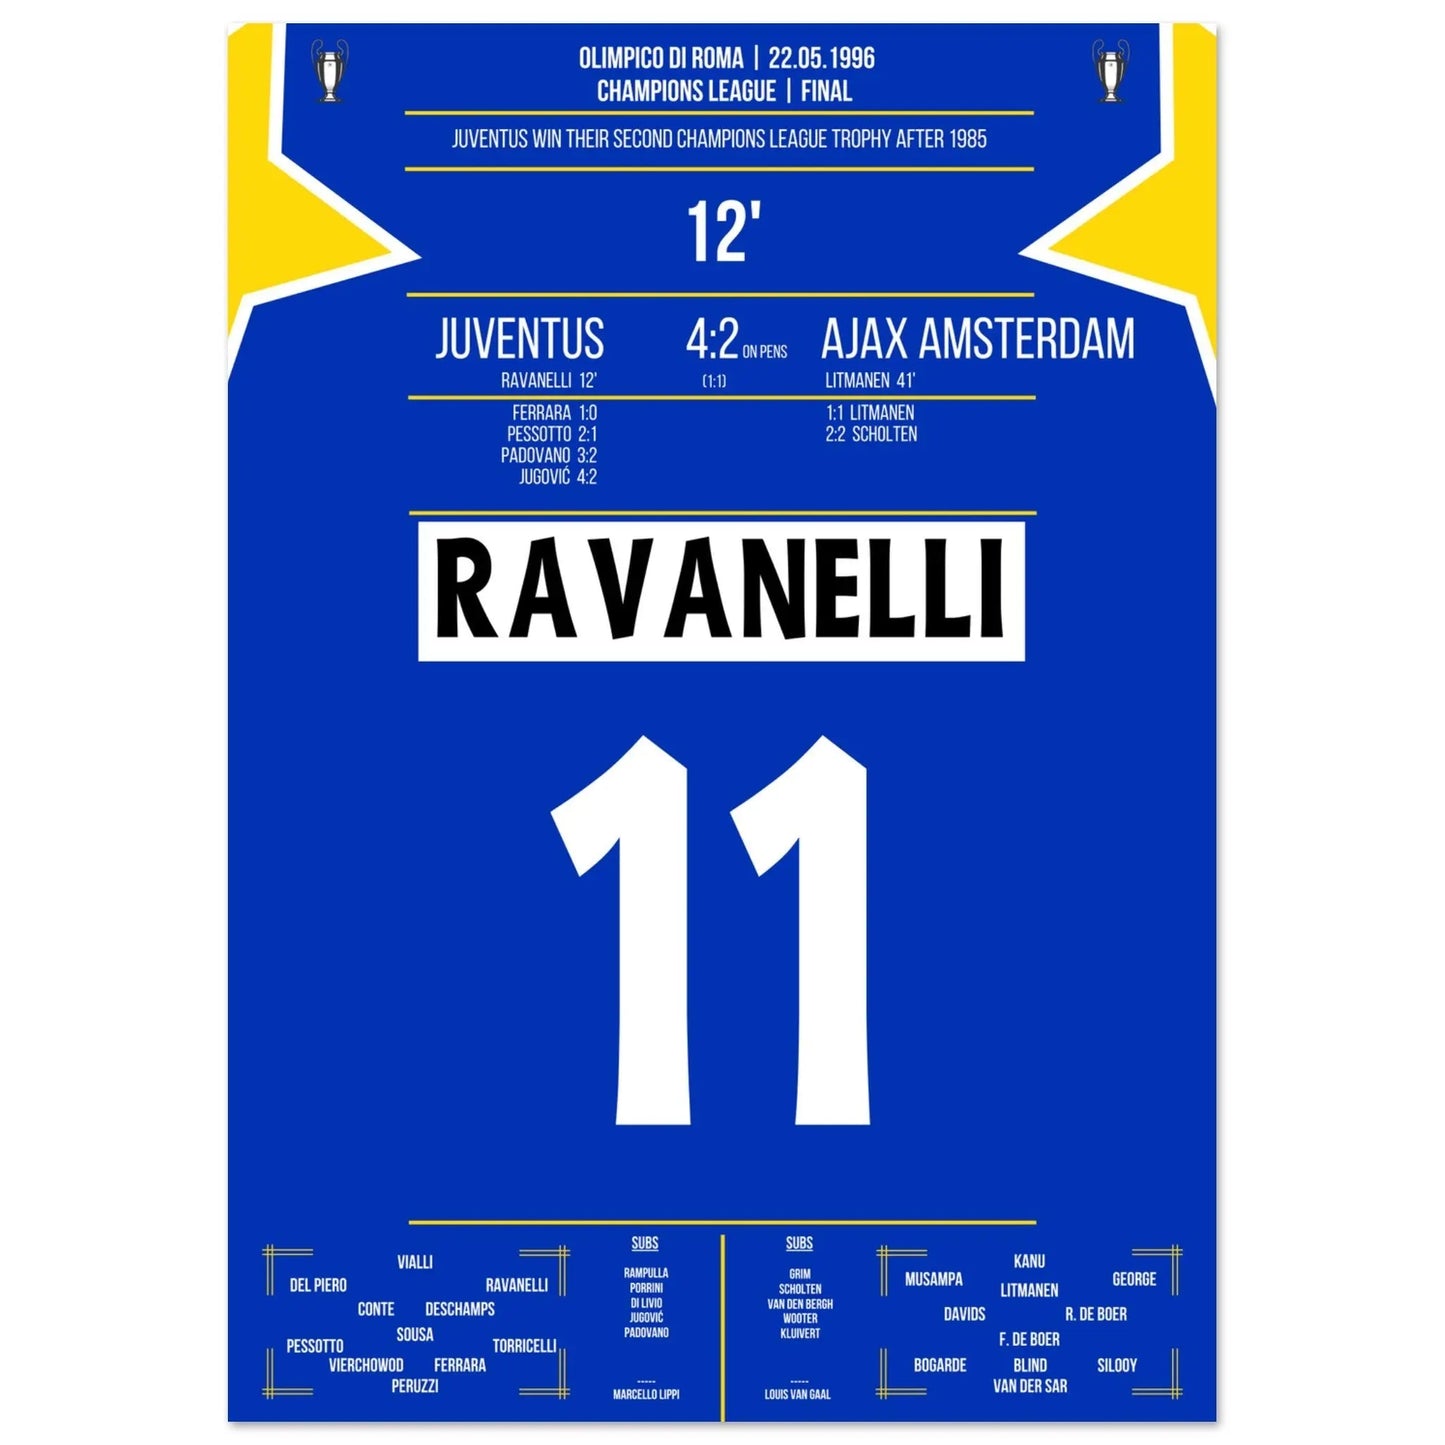 El gol de Ravanelli en la final de la Champions de 1996